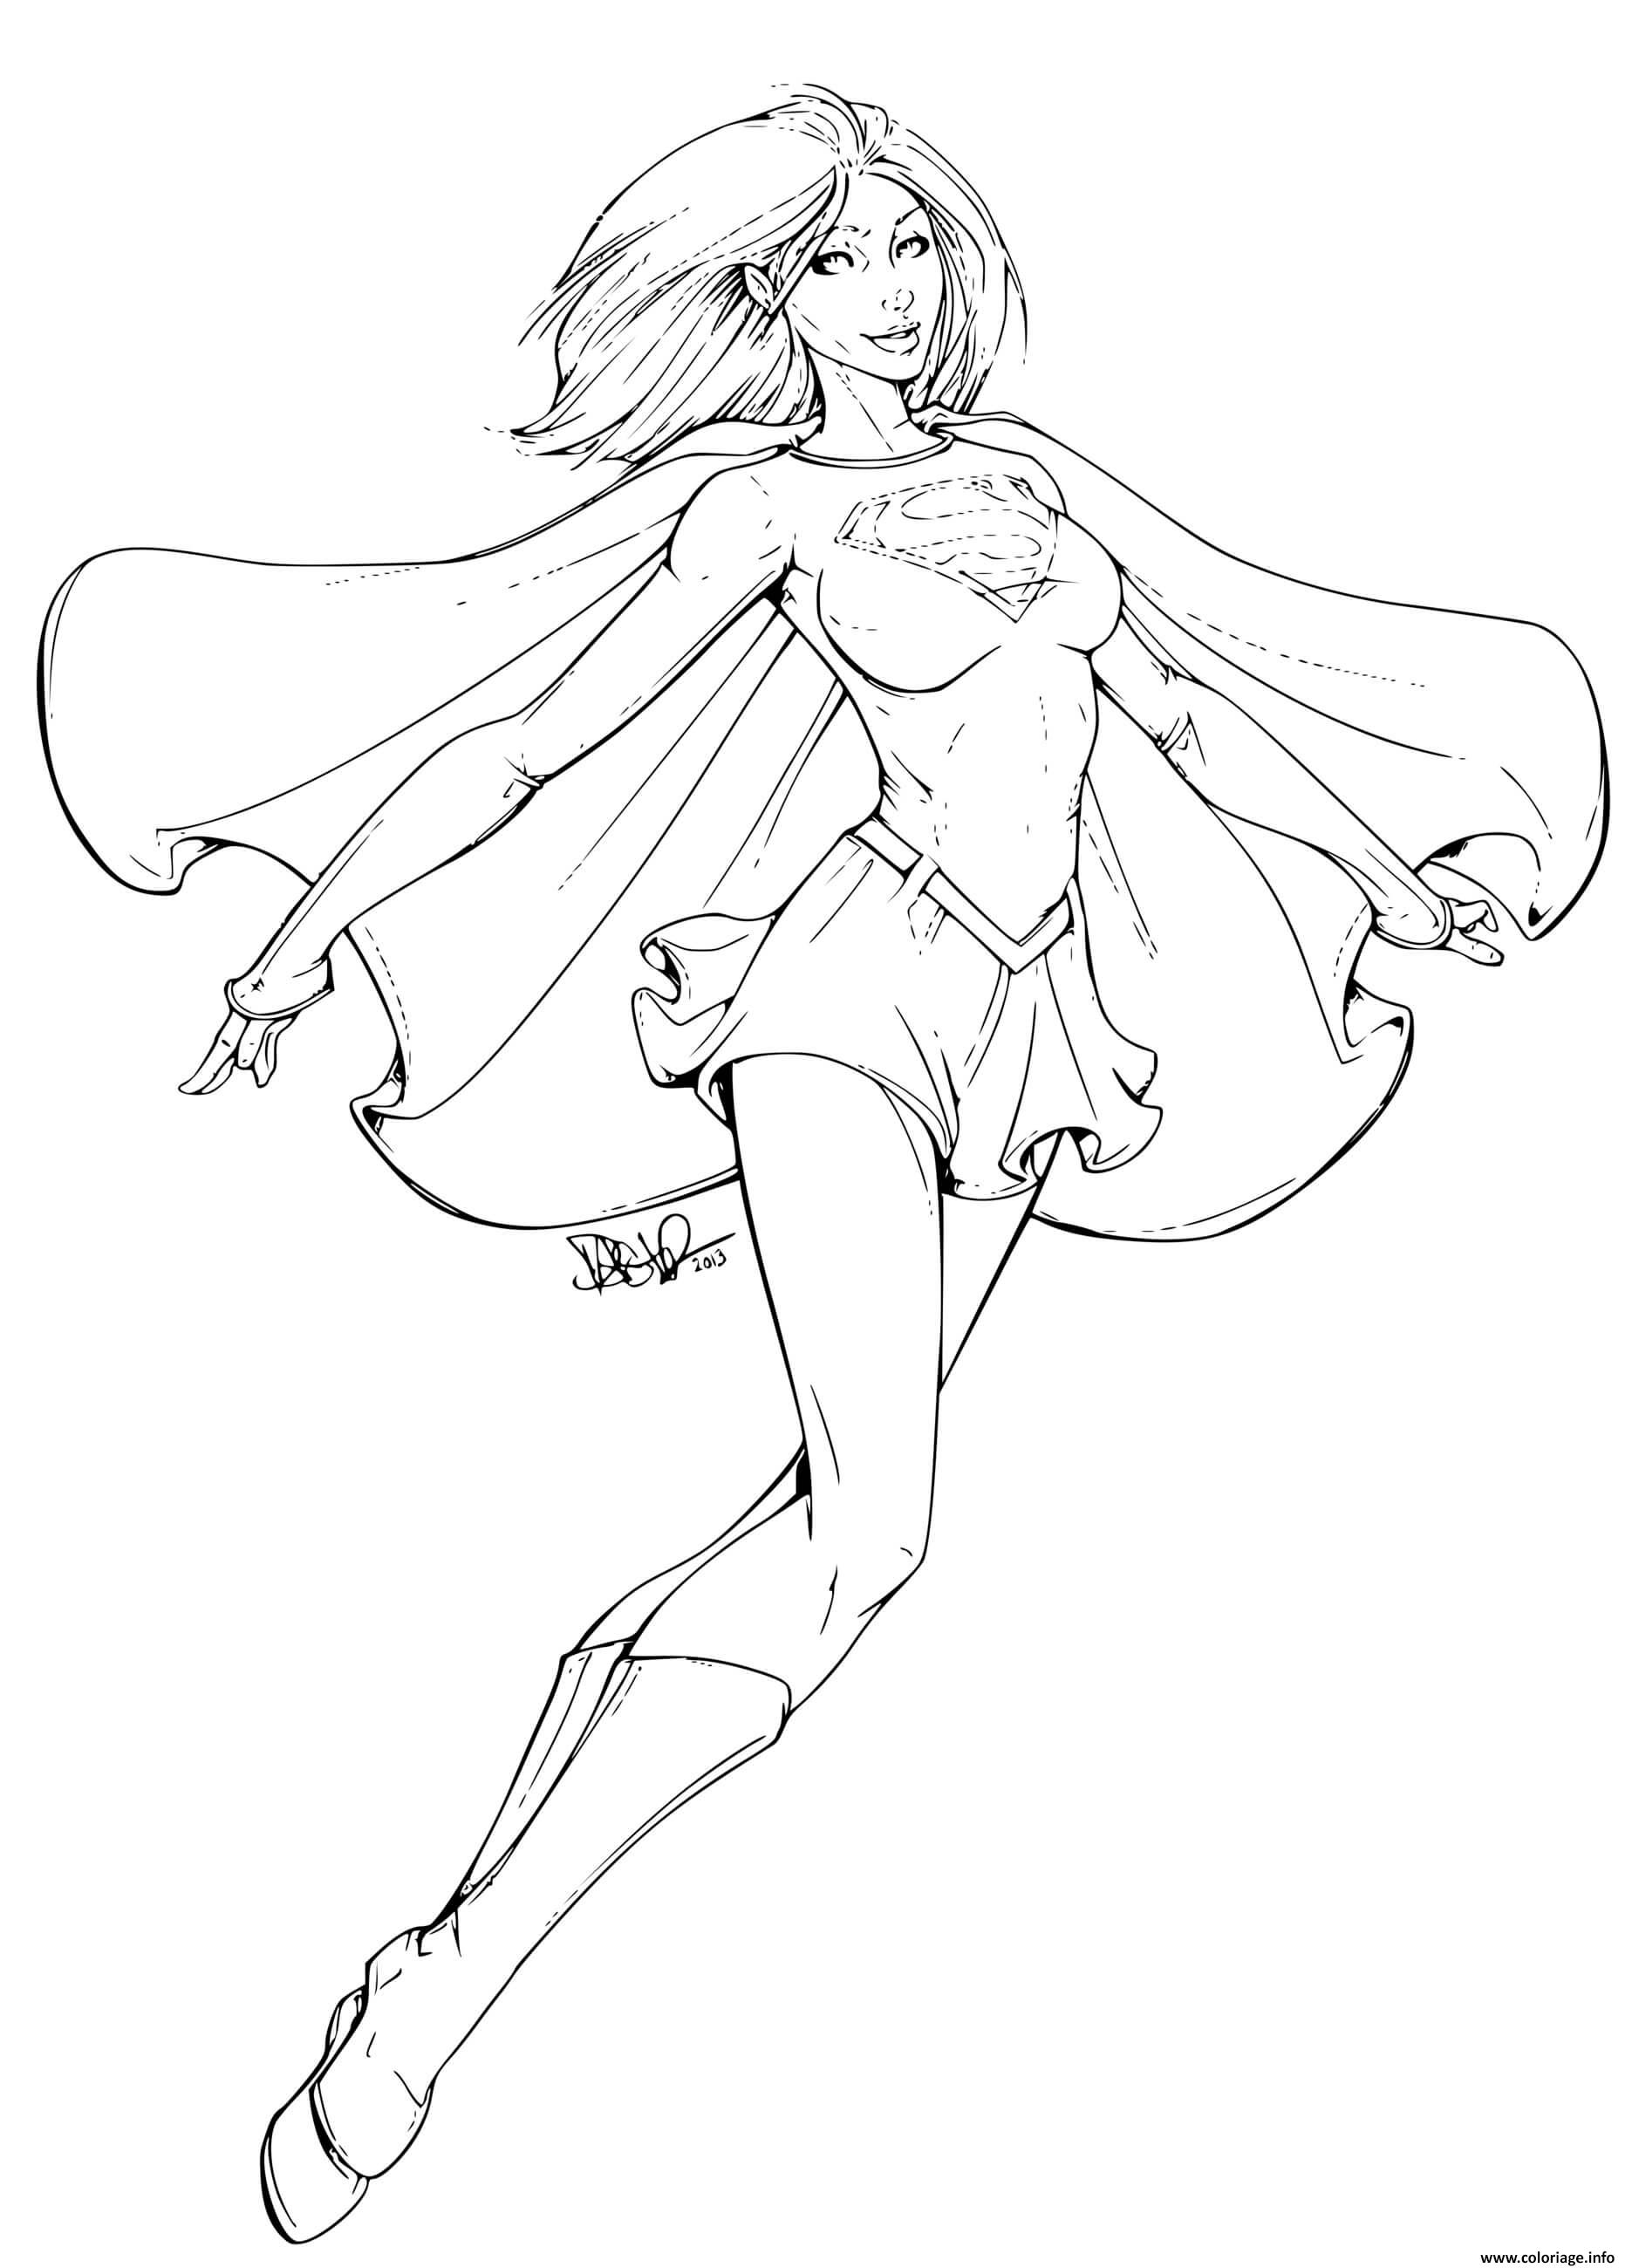 Dessin Super heroine Supergirl Marvel Coloriage Gratuit à Imprimer